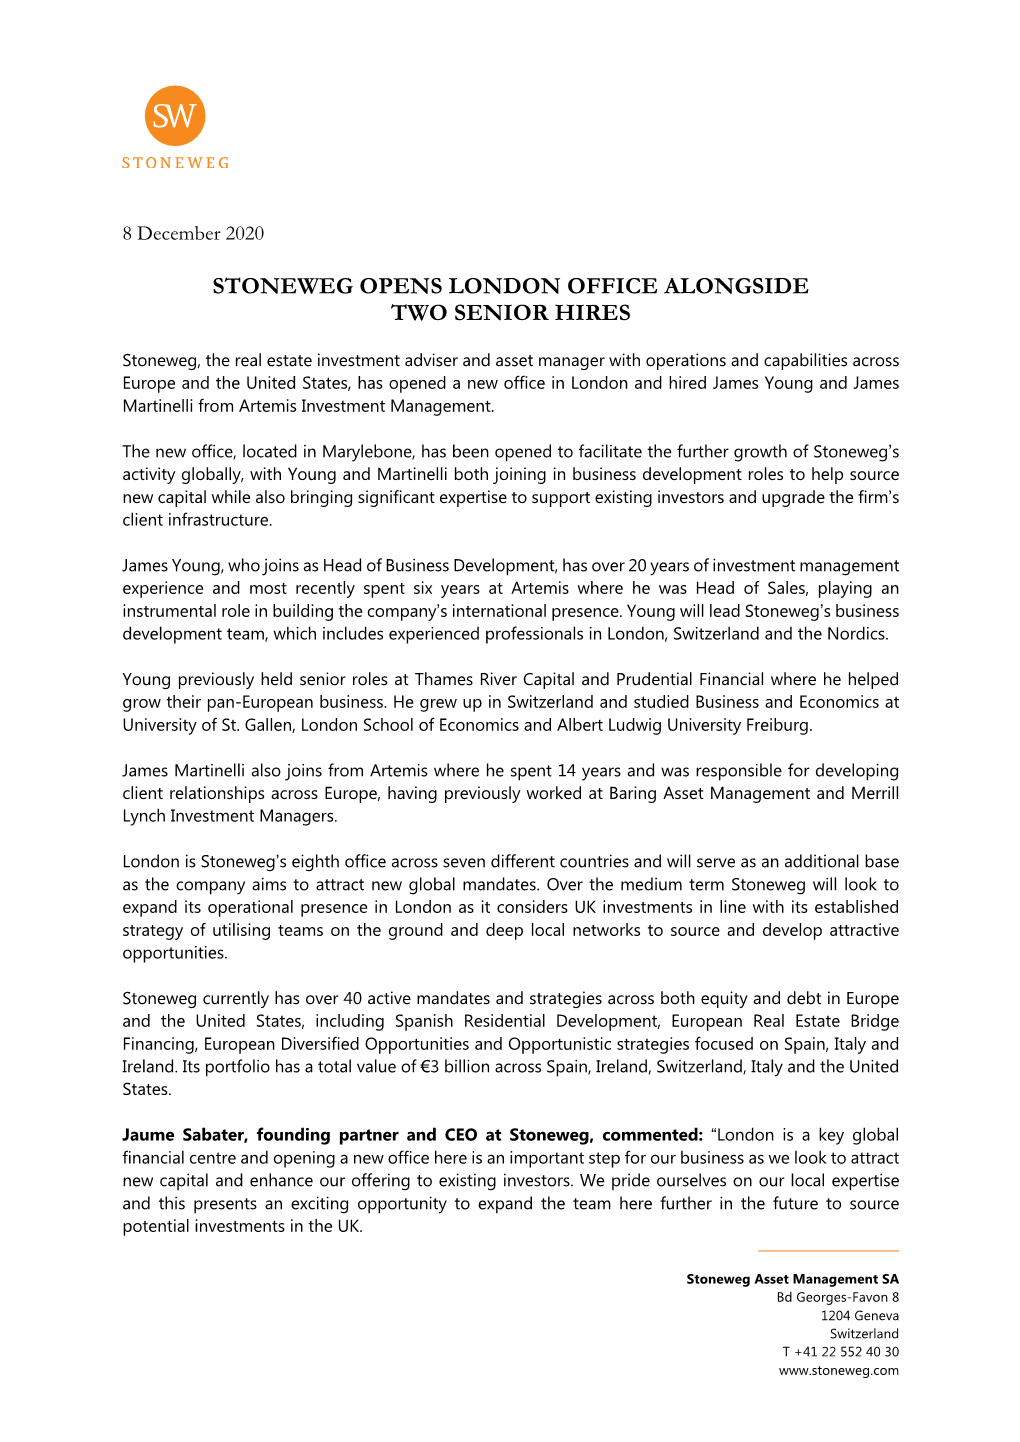 Stoneweg Opens London Office Alongside Two Senior Hires